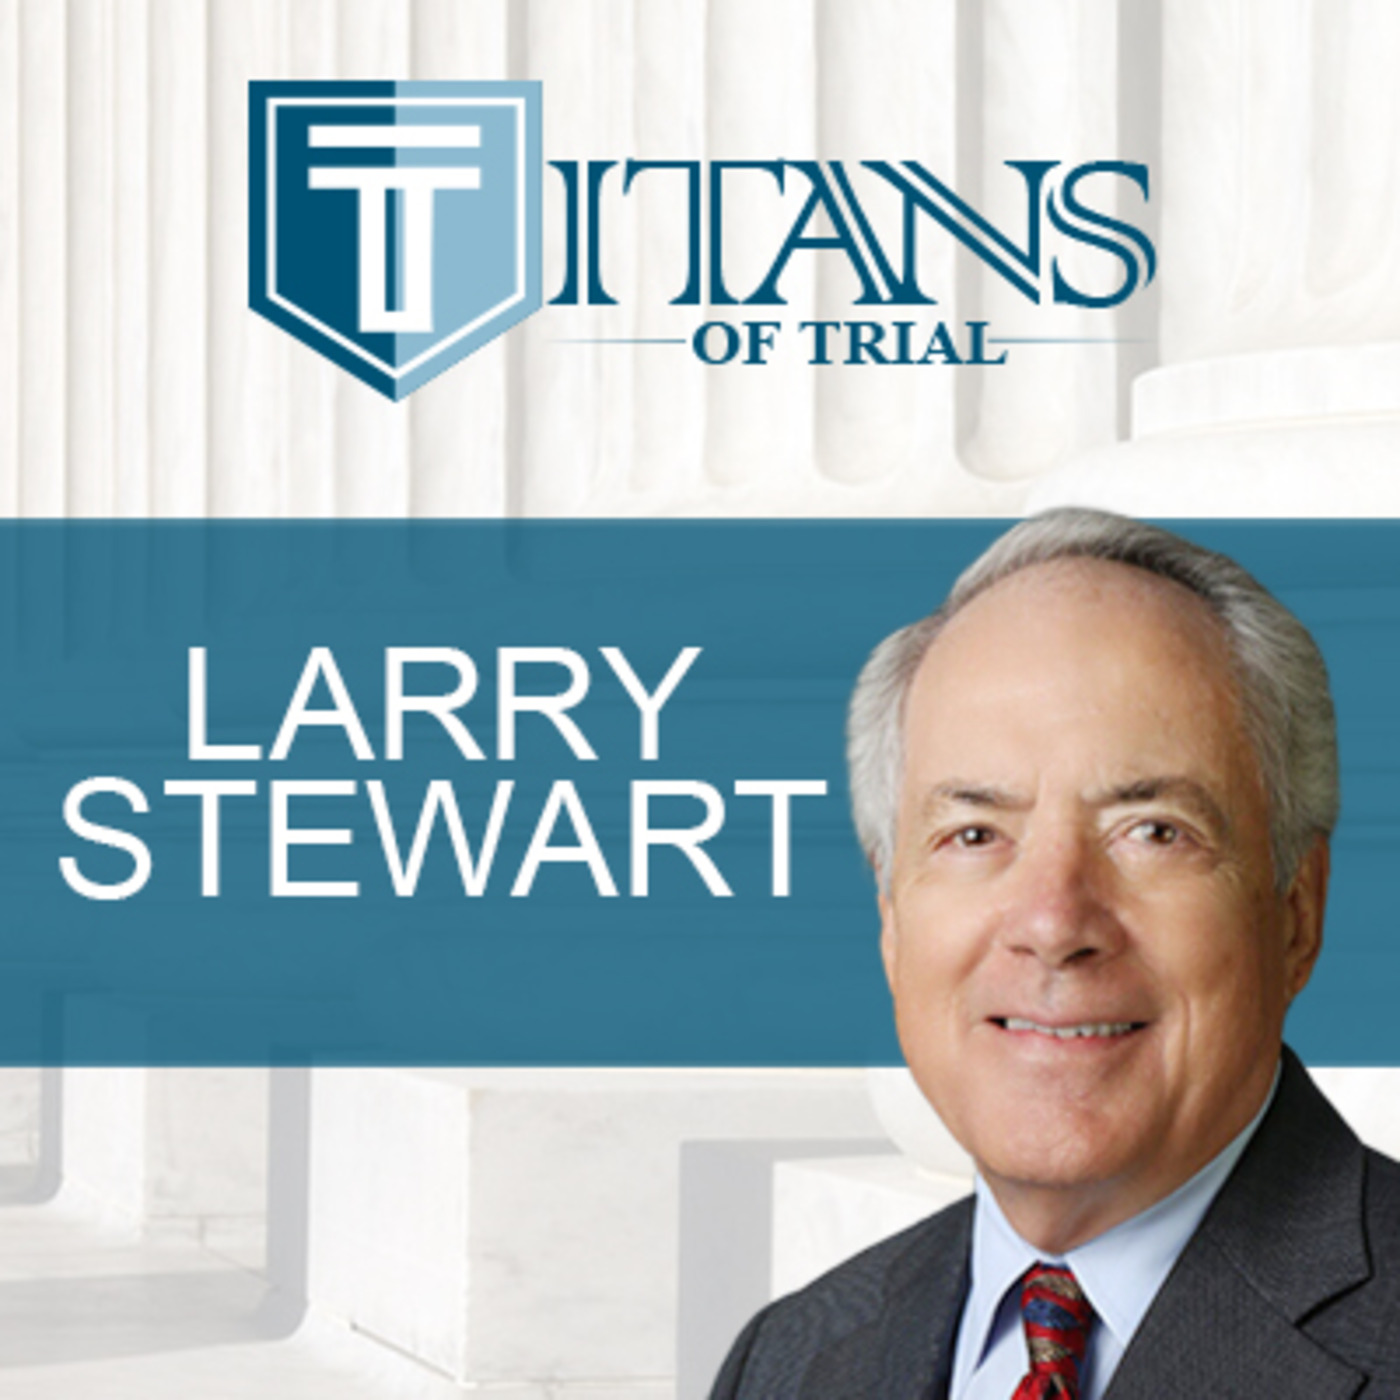 Titans of Trial – Larry Stewart